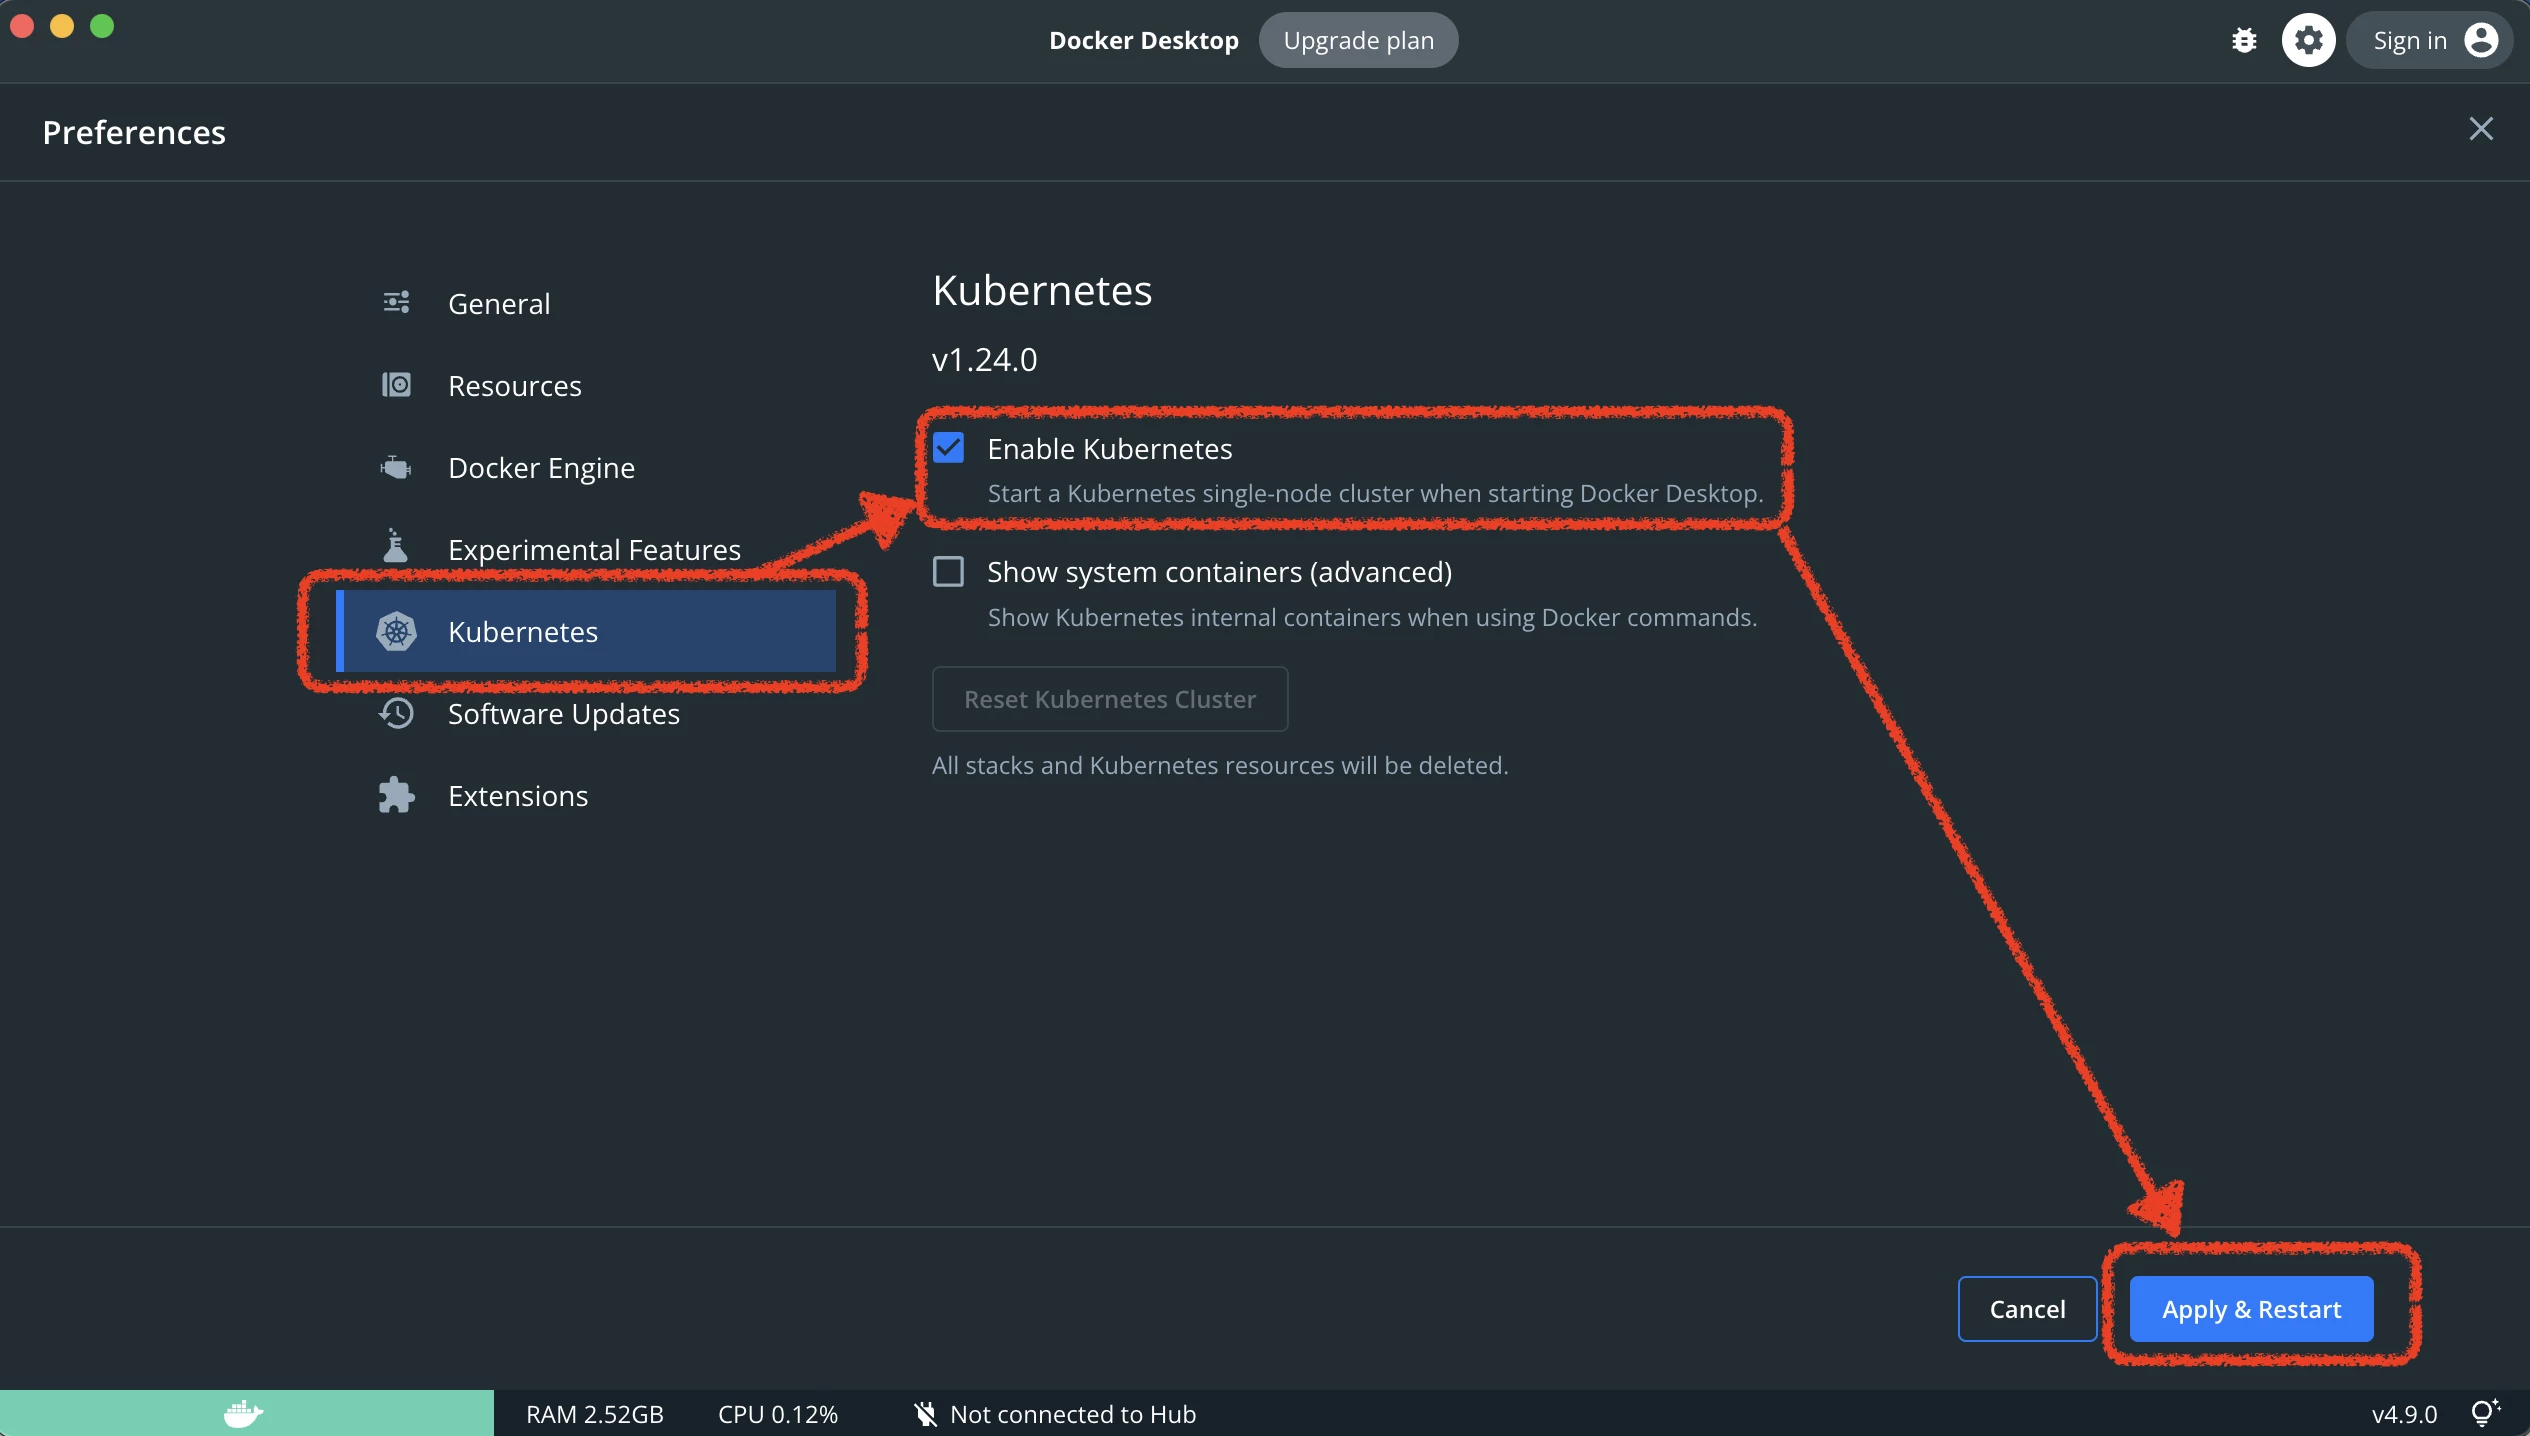 Kubernetes enable button in Docker Desktop preferences